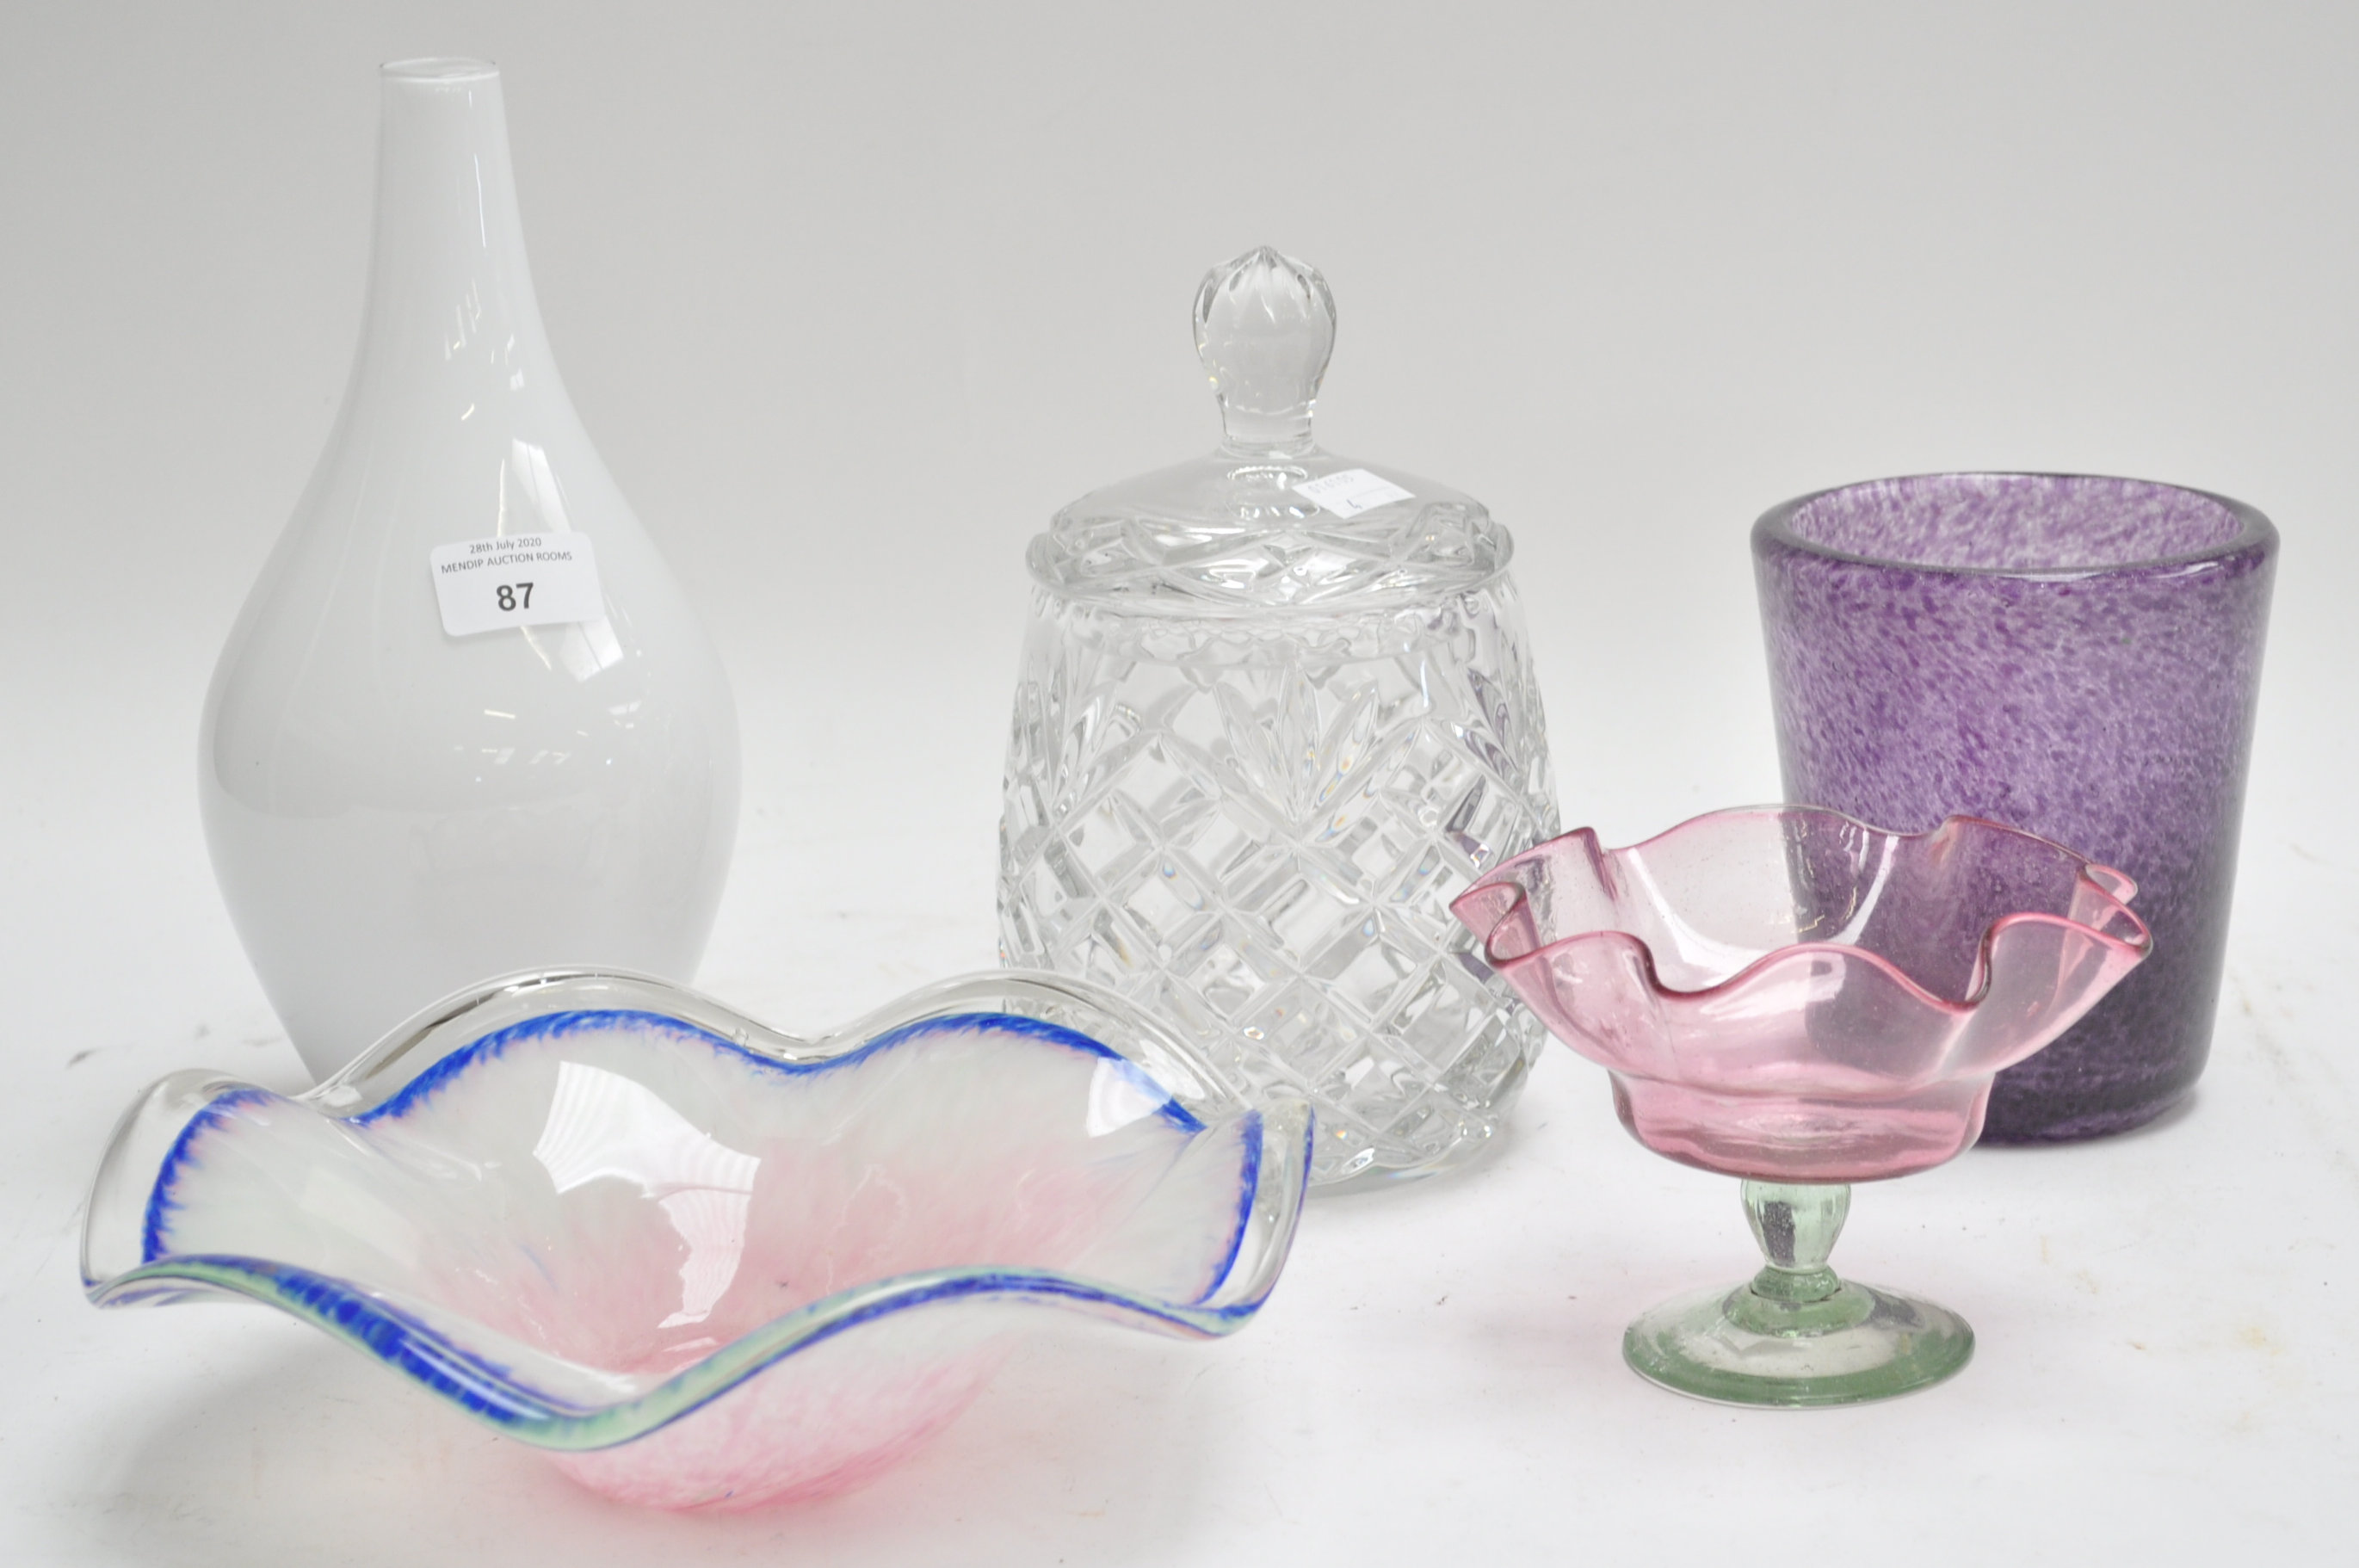 Five pieces of Studio glass